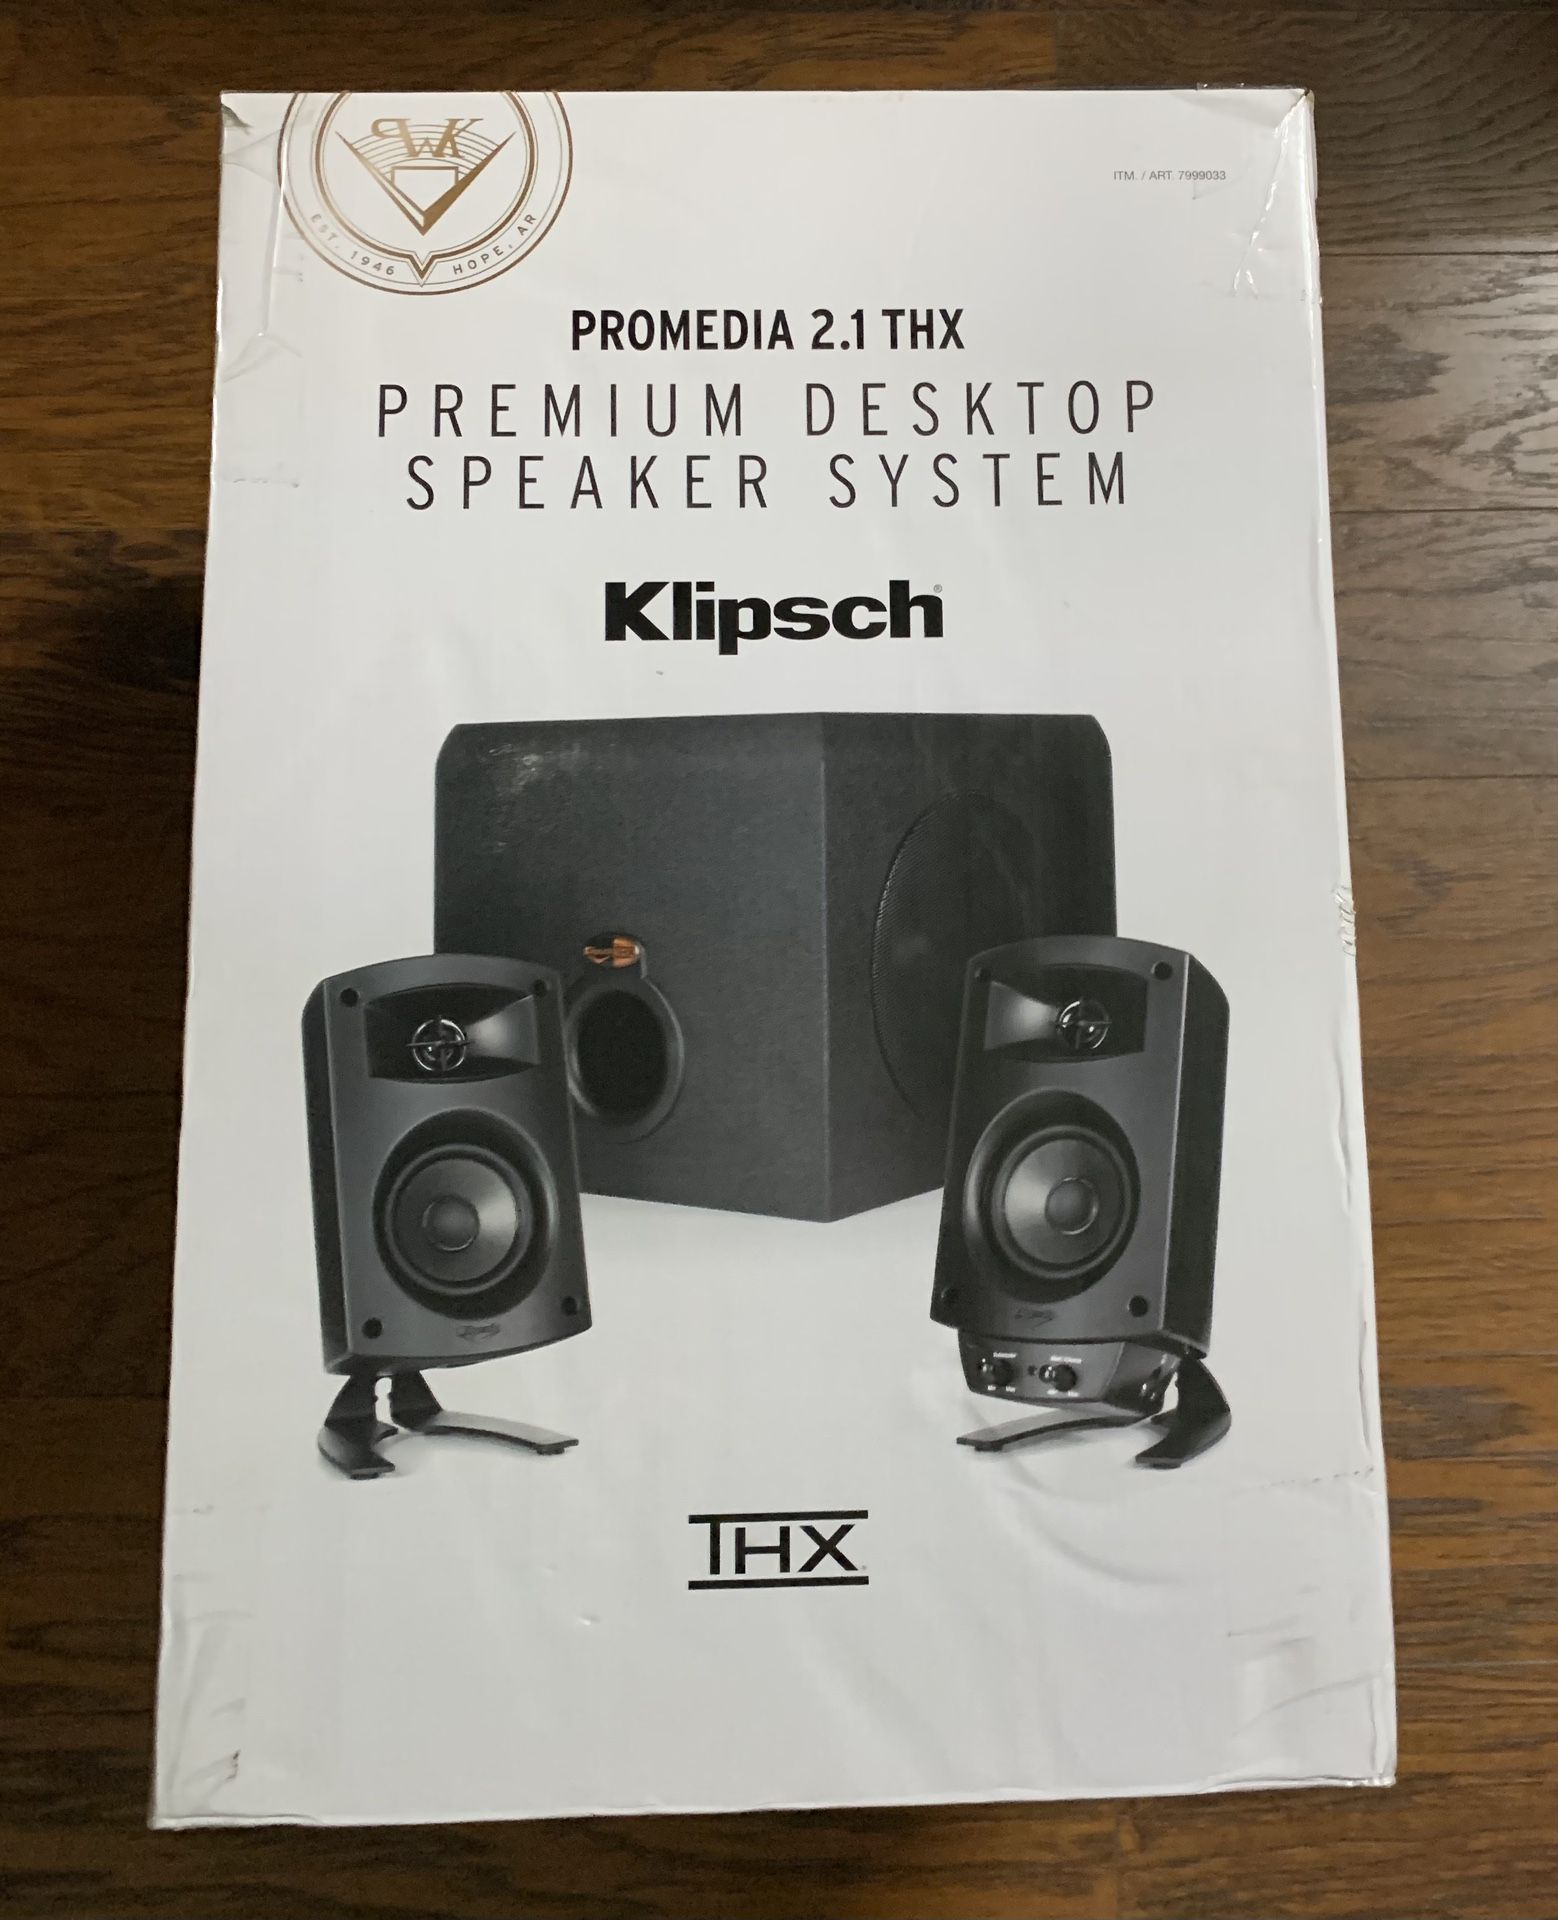 Klipsch Premium Desktop Speaker System Promedia 2.1 THX